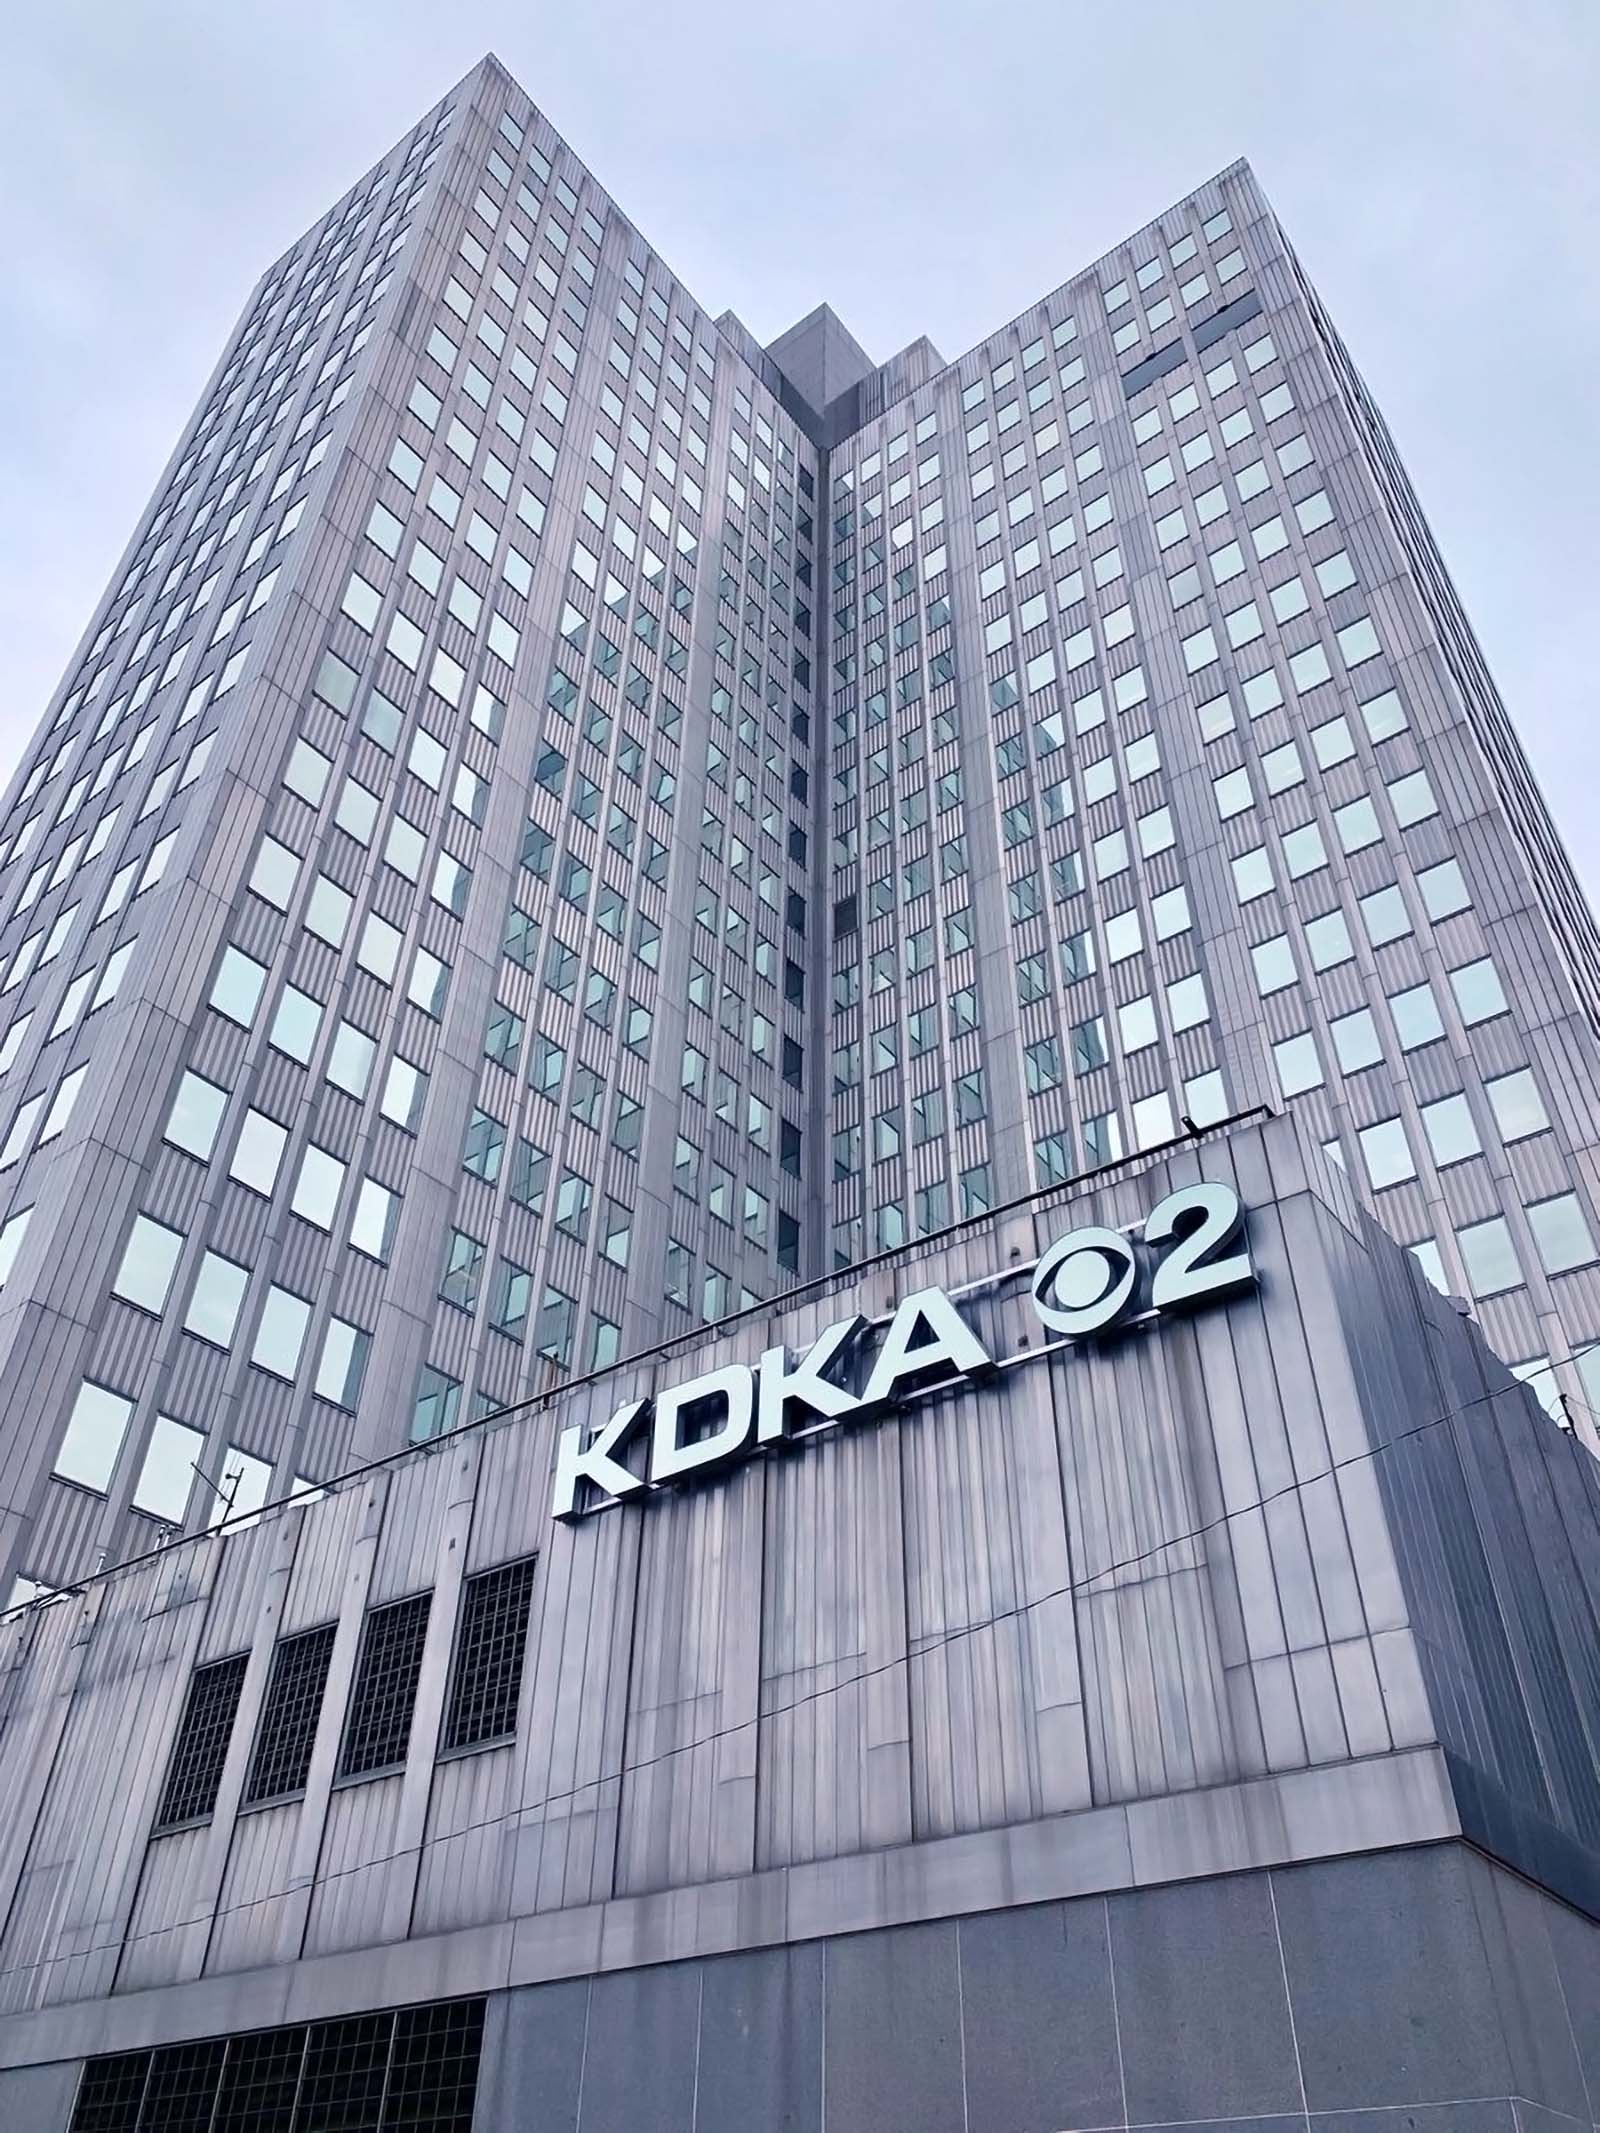 KDKA TV building